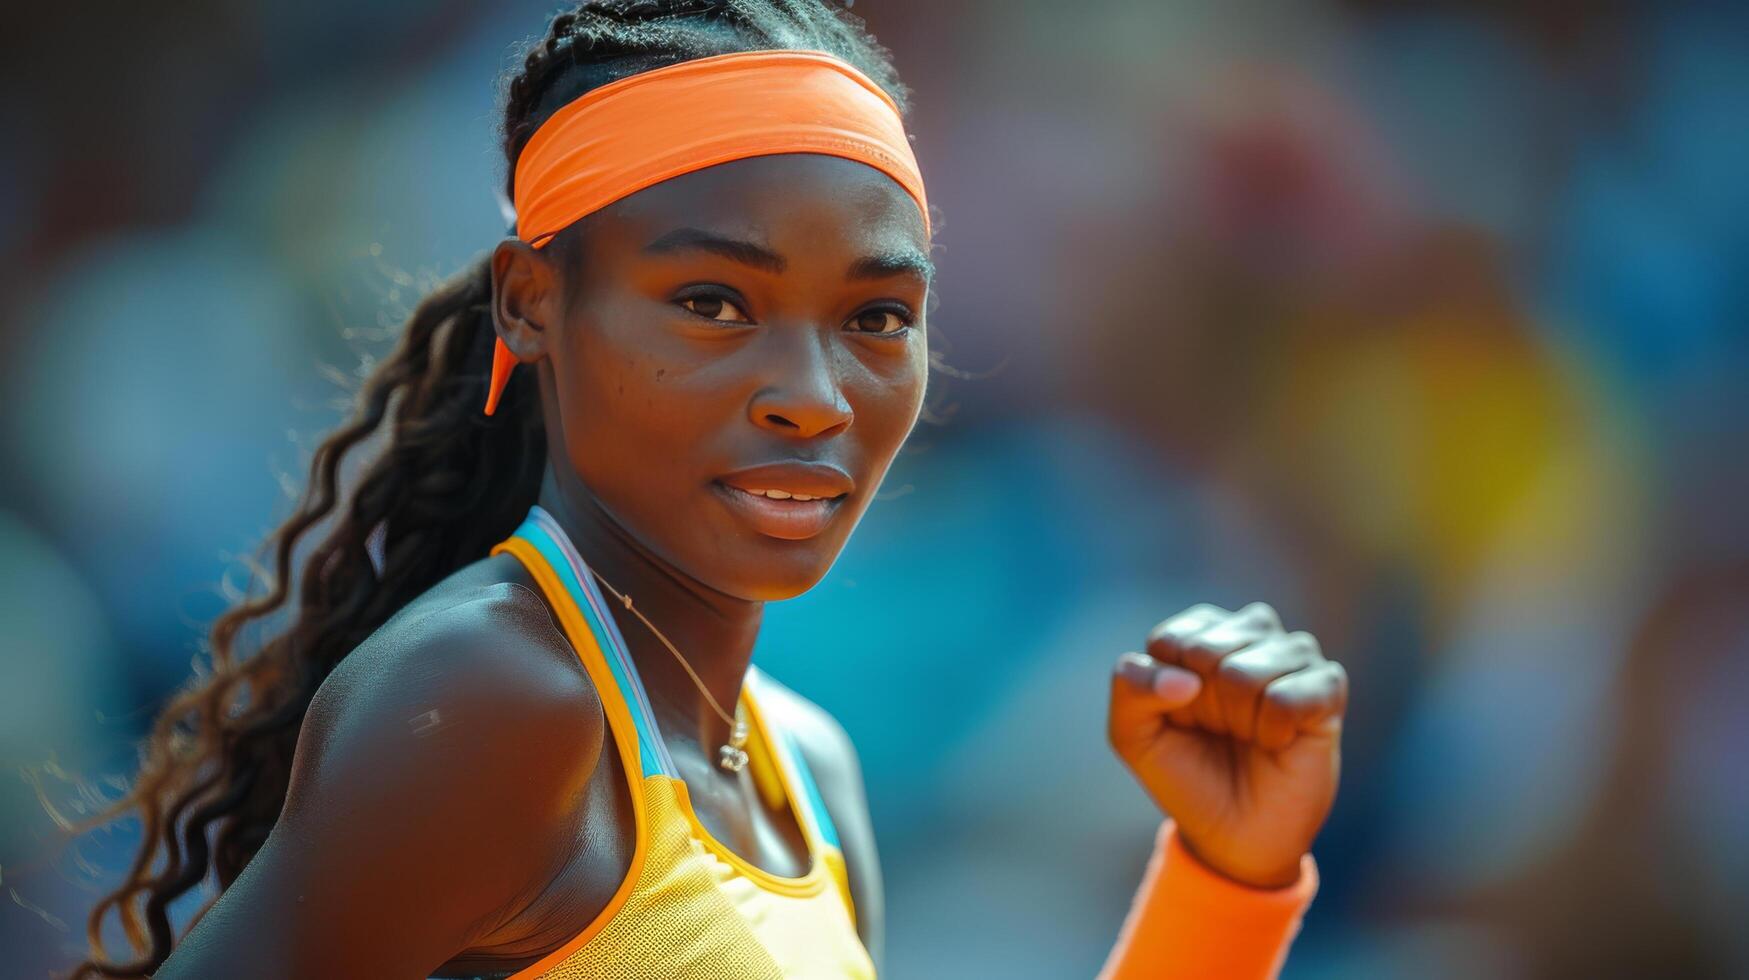 AI generated Female Tennis Player in Yellow Top and Orange Headband photo